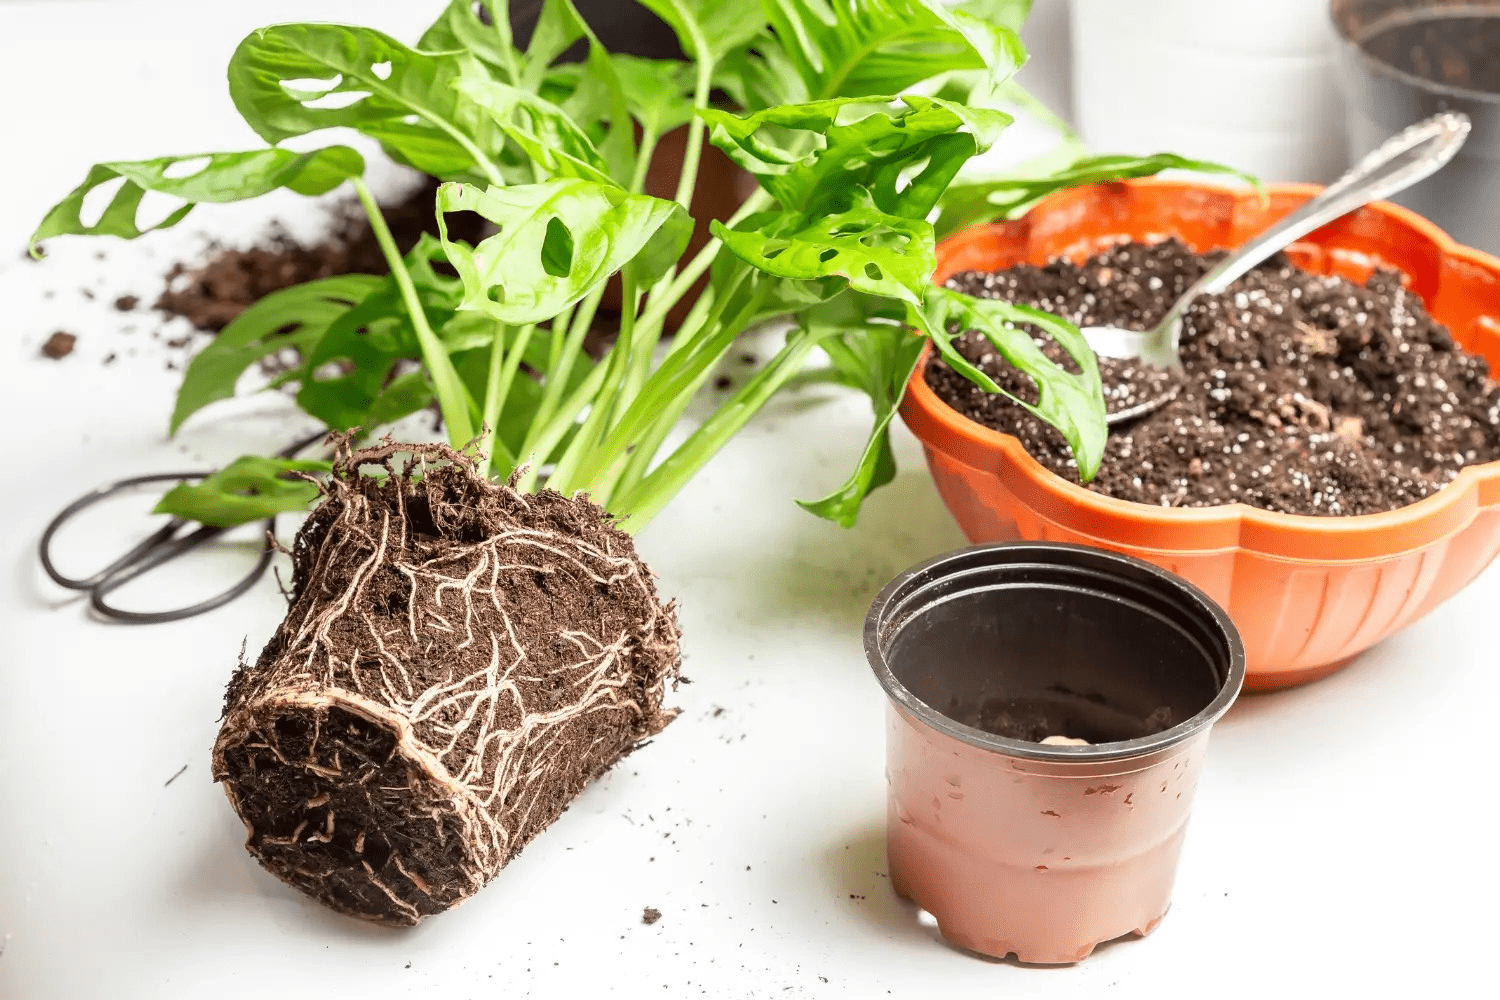 Fertilizing tips to enhance growth and foliage development